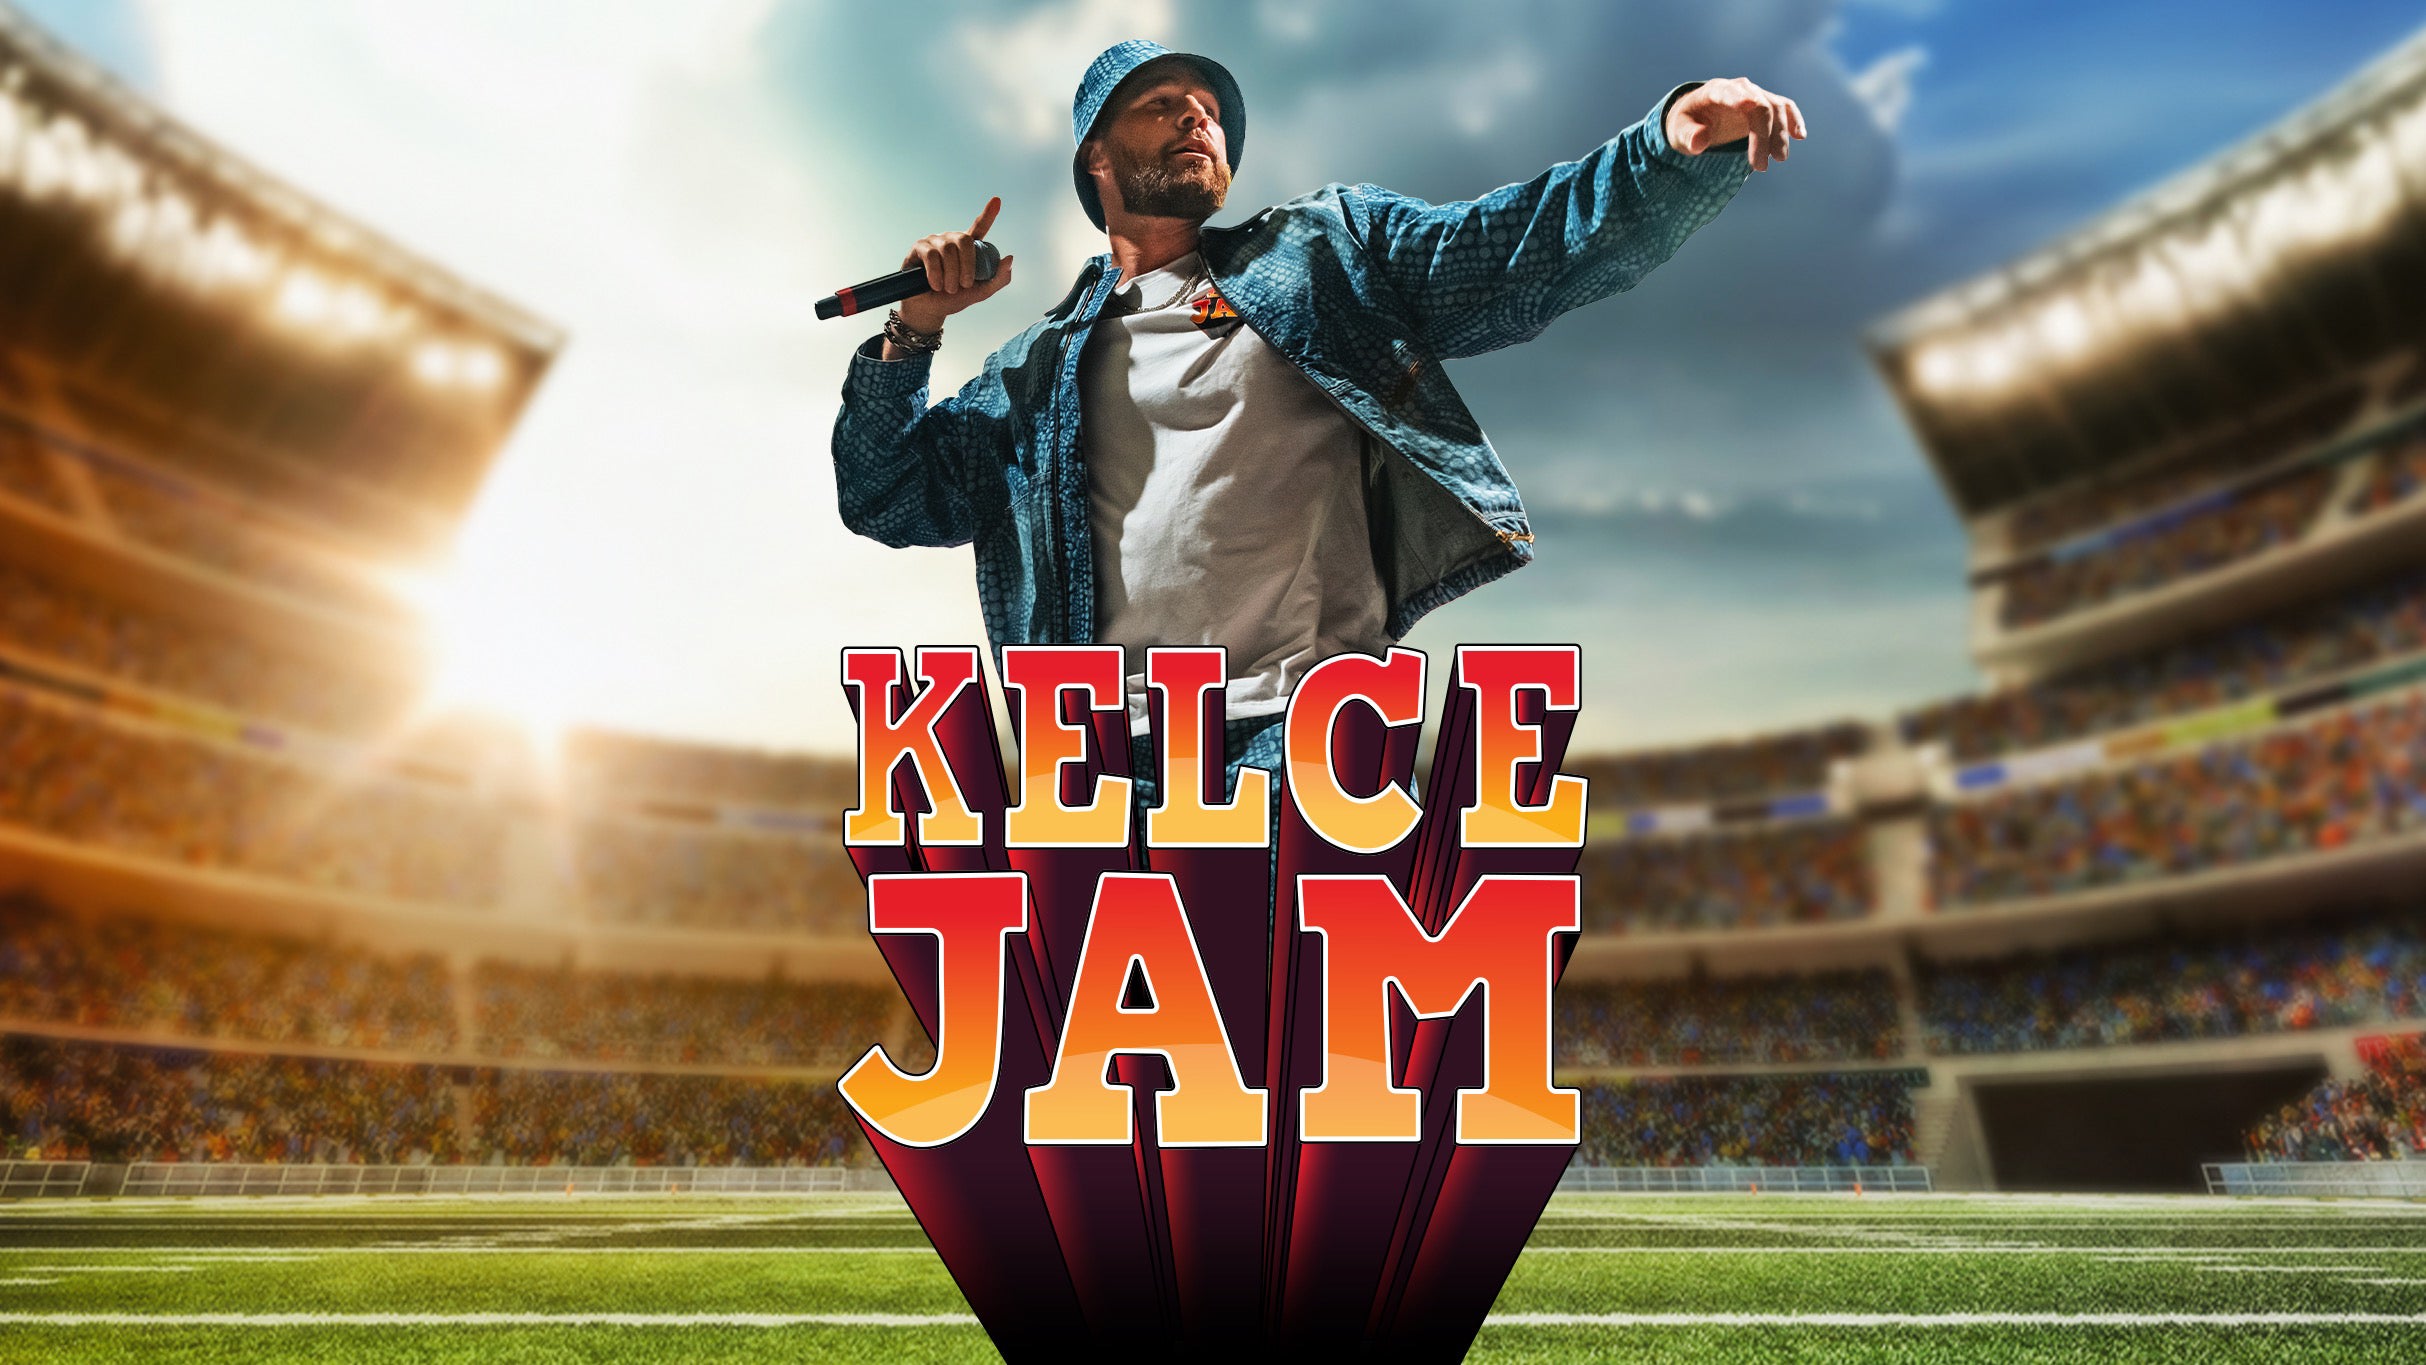 Kelce Jam Presented by Jim Beam in Bonner Springs promo photo for Cash App presale offer code